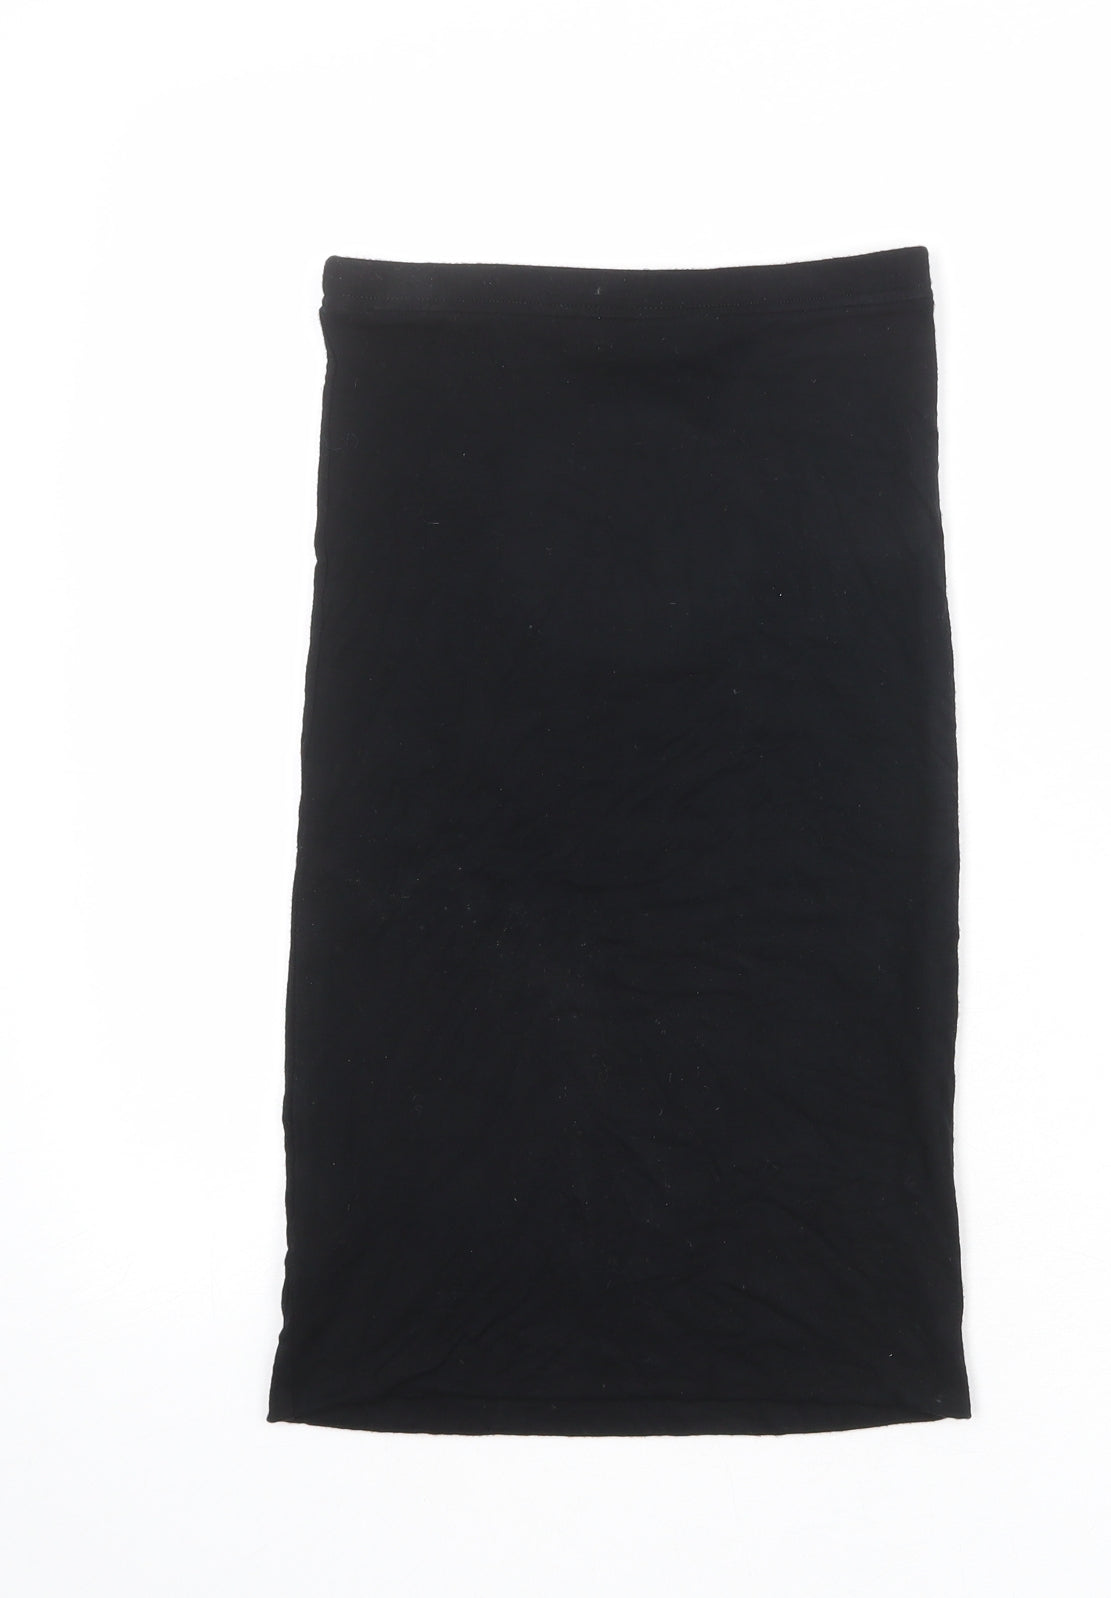 Topshop Womens Black Viscose Bandage Skirt Size 6